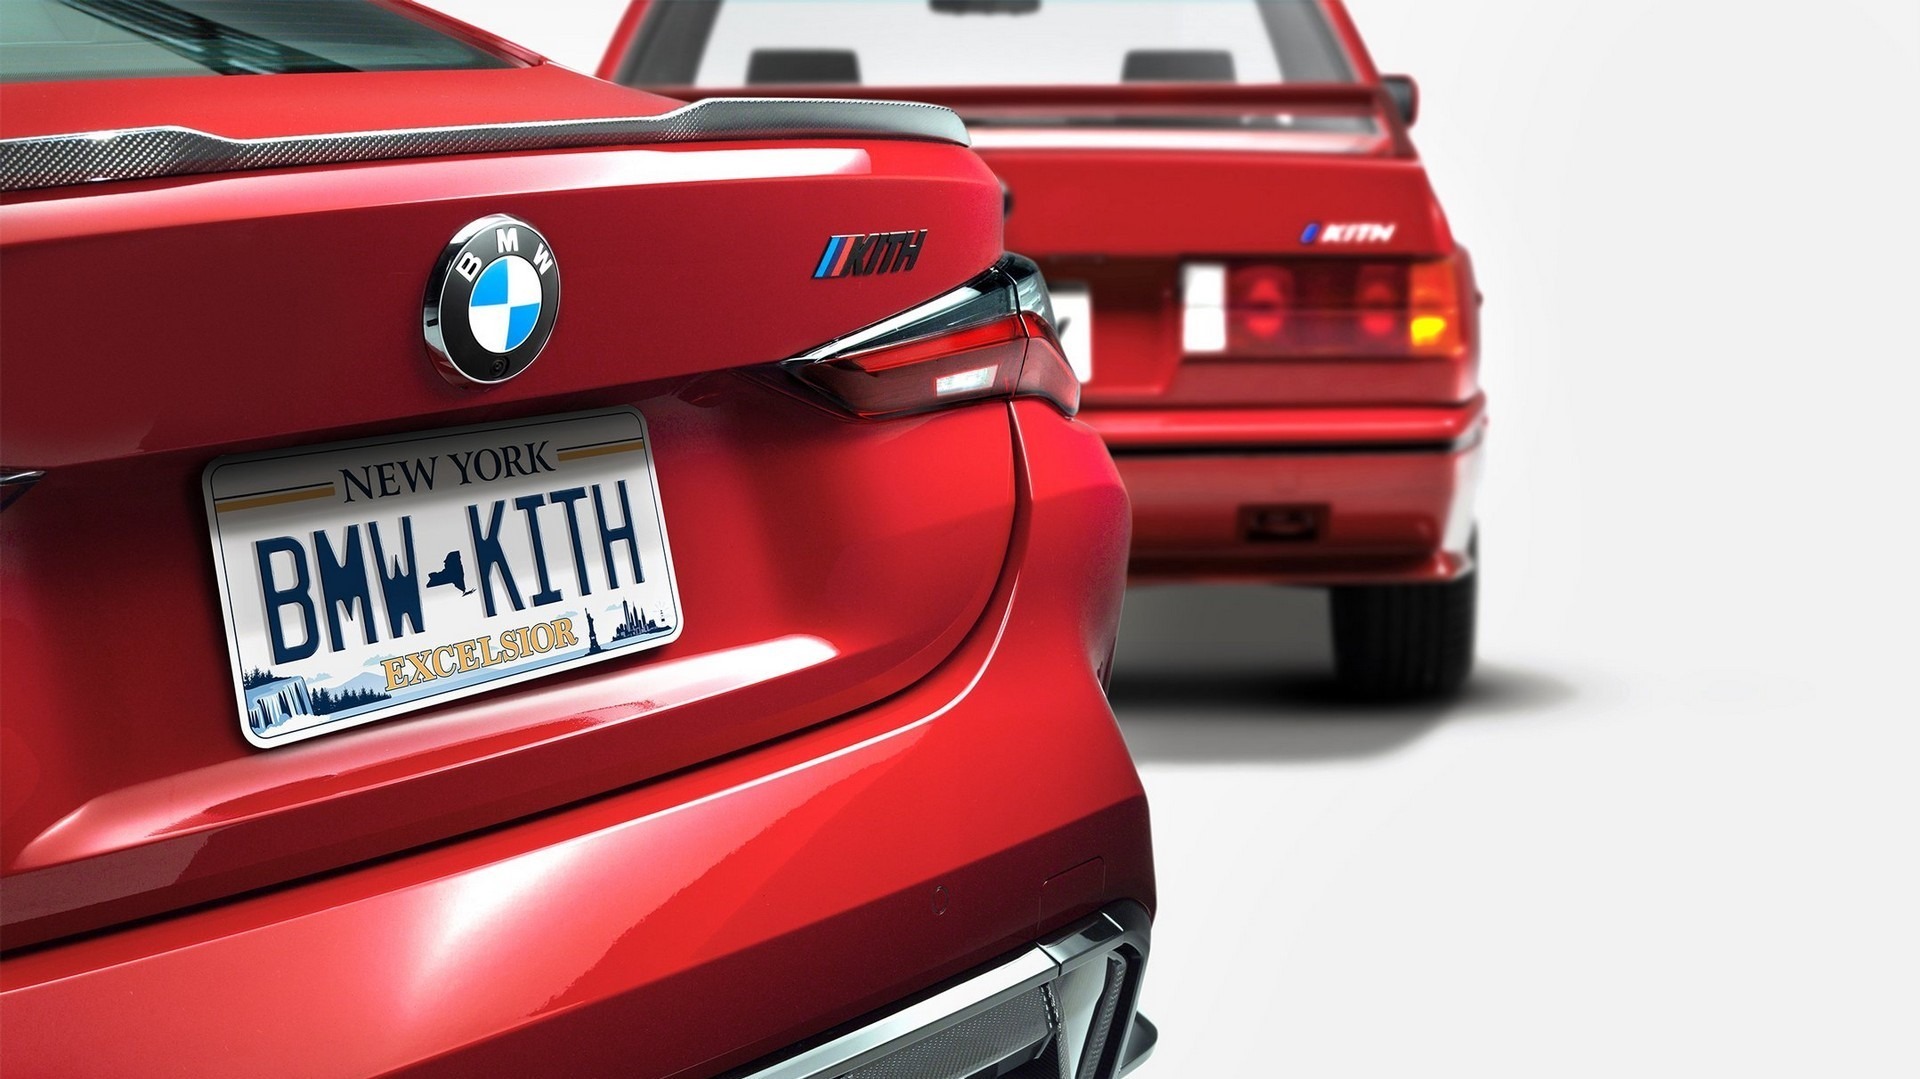 BMW M3 Ronnie Fieg Edition BMW M4 Design Study by Kith (3)